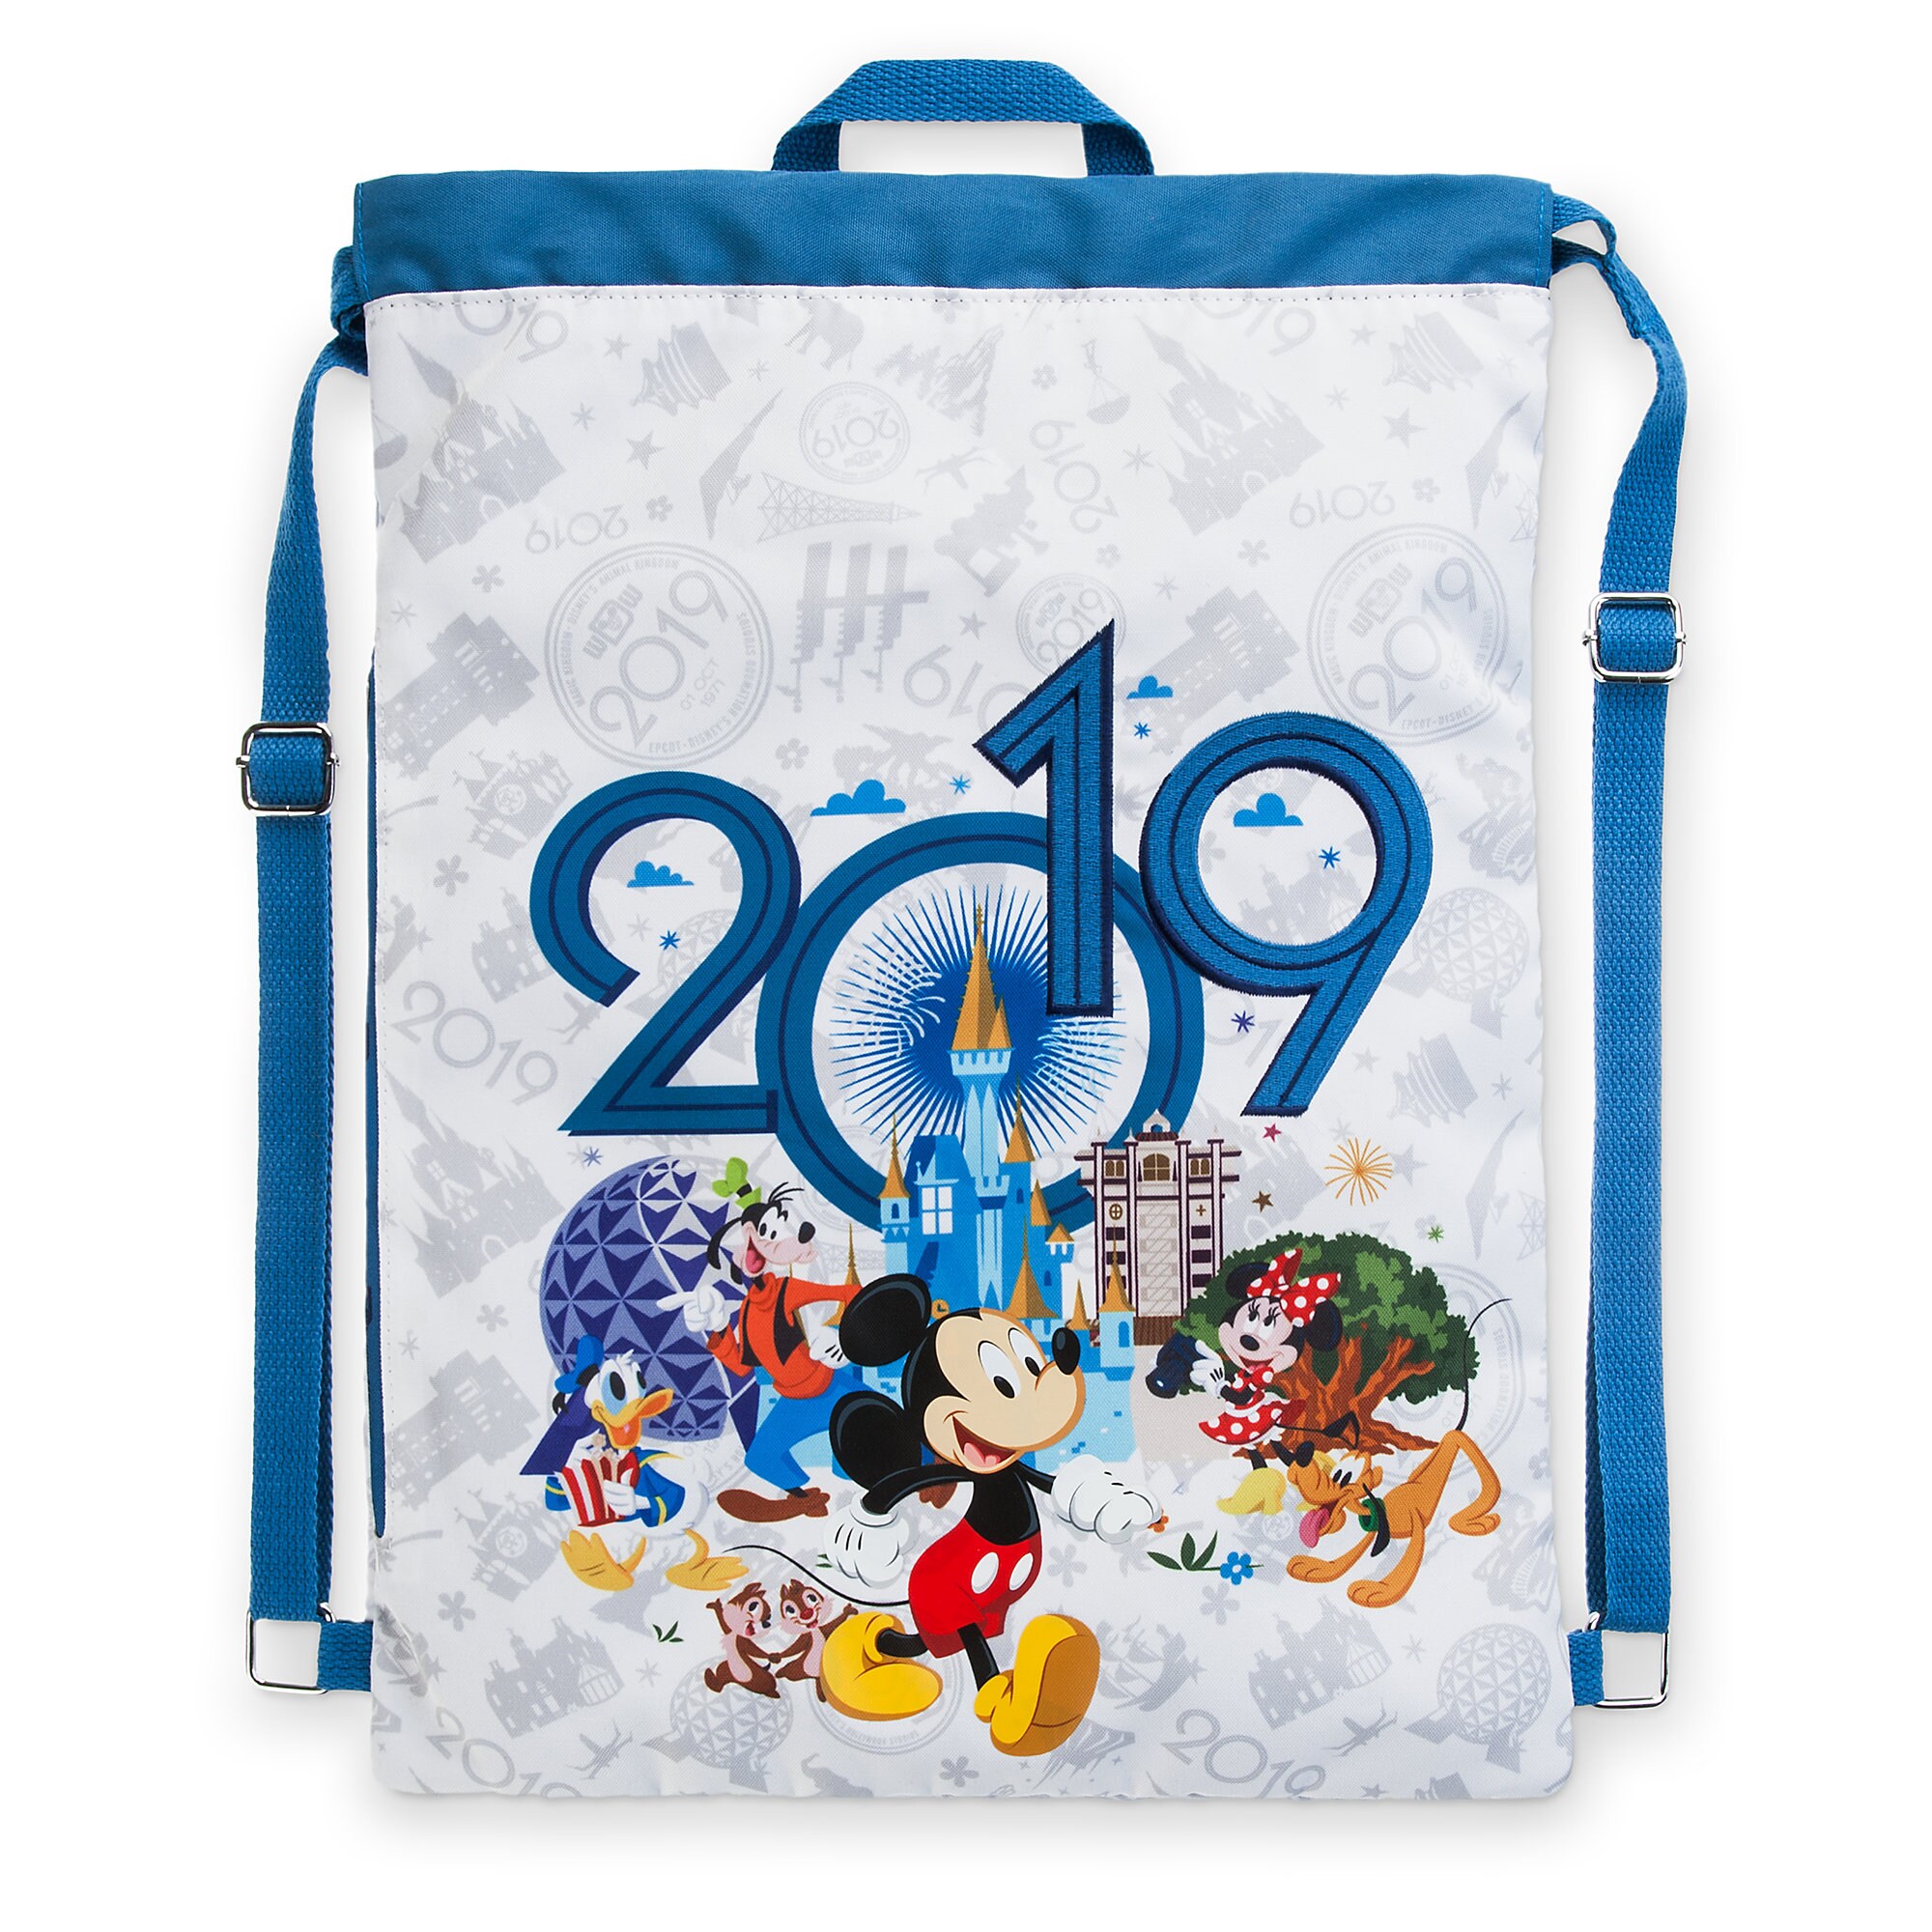 Mickey Mouse and Friends Cinch Sack - Walt Disney World - 2019